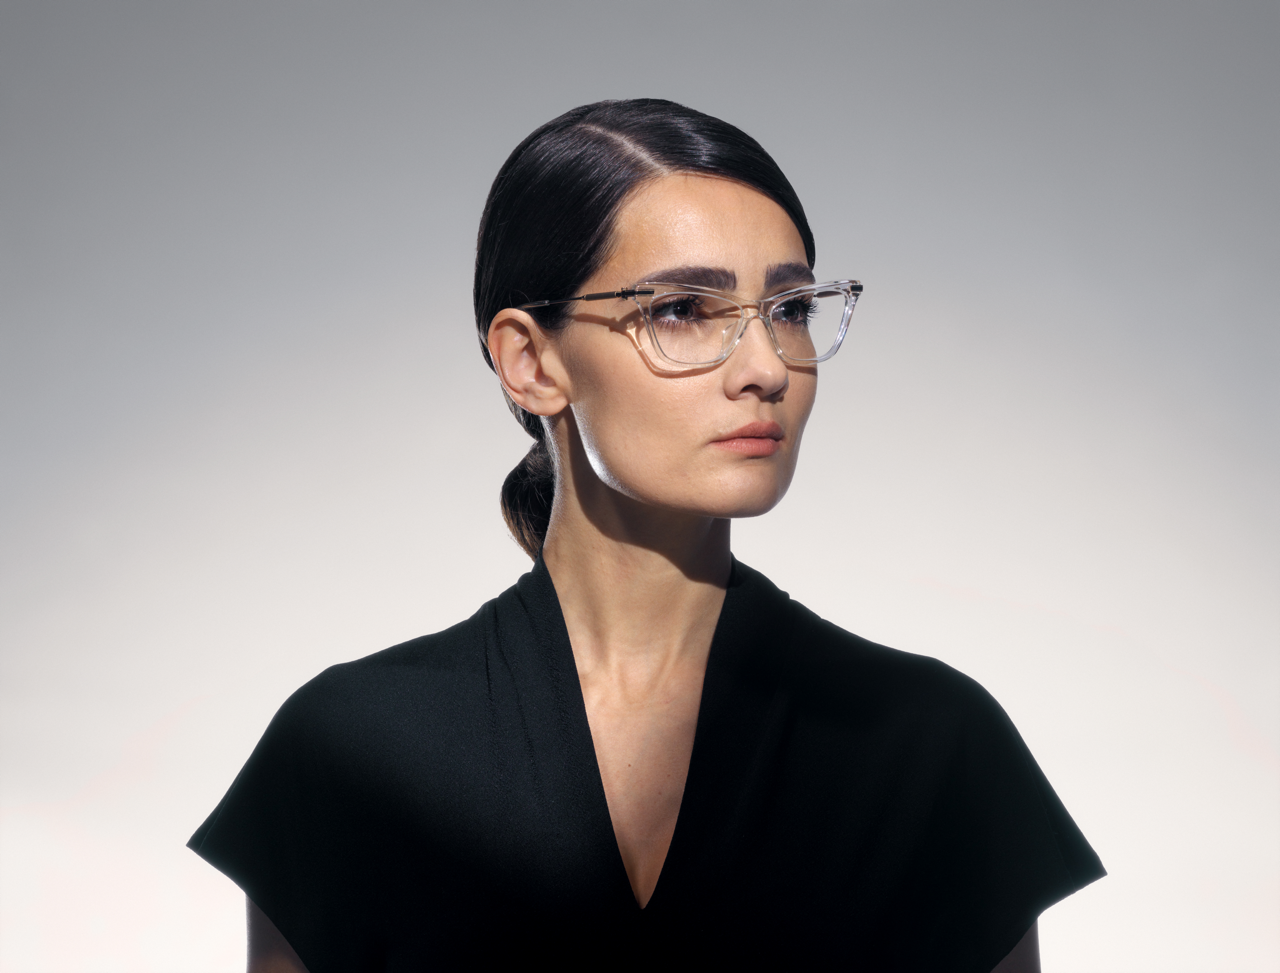 akoni iris optical glasses lifestyle side female